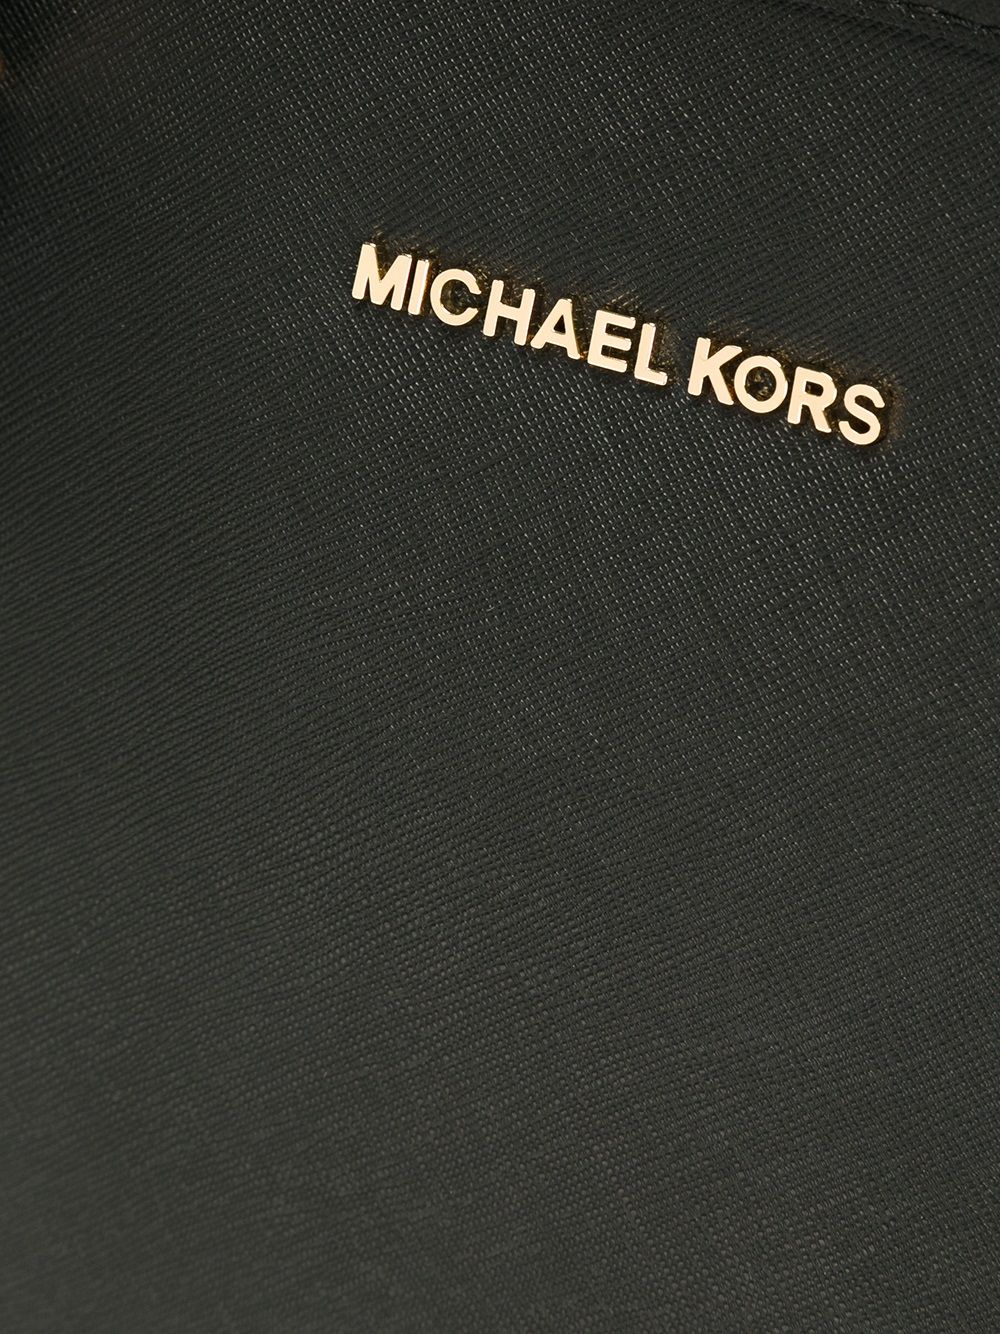 Michael Michael Kors Jet Set Travel Phone Case - Farfetch